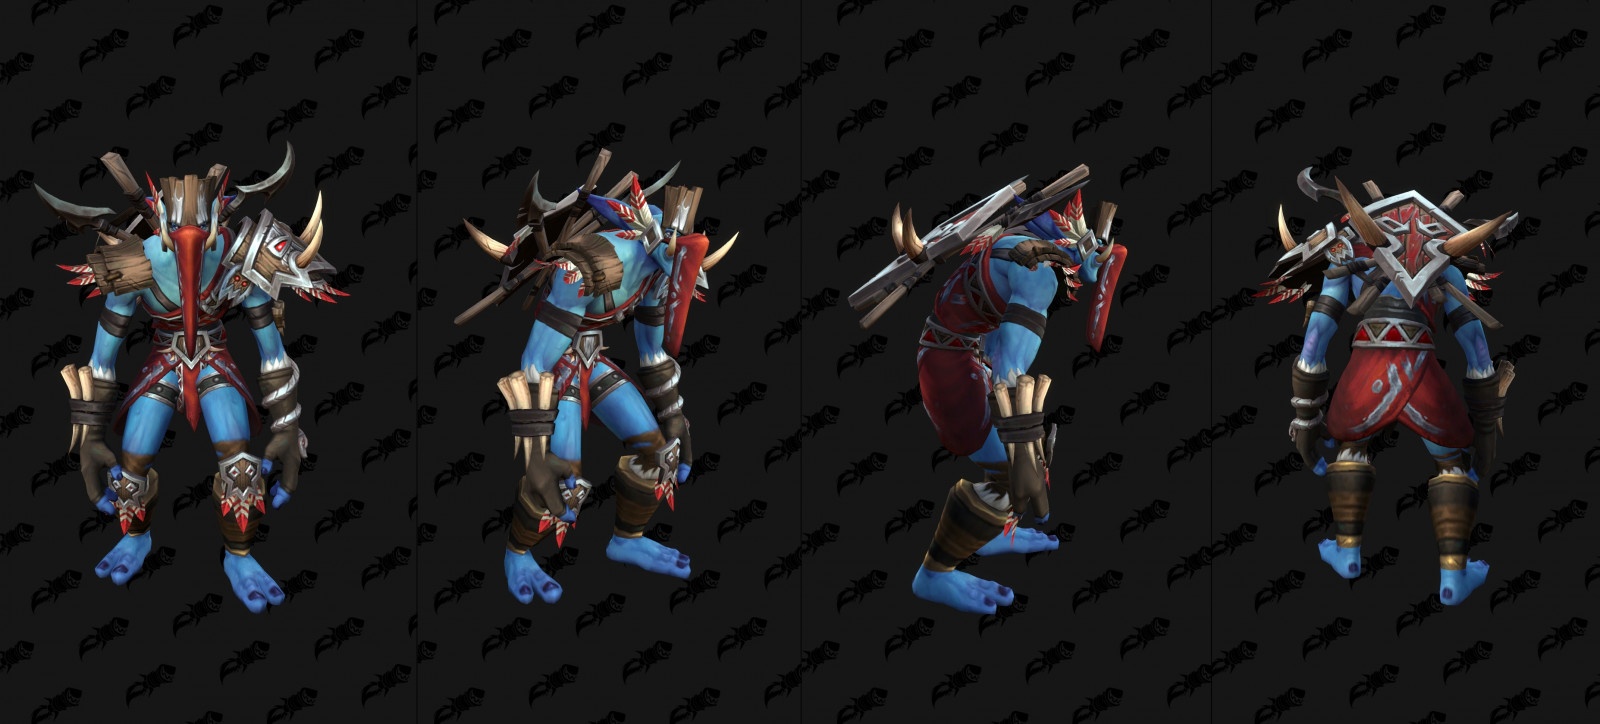 Darkspear Troll Heritage Armor Questline Rewards - Including Two Unique Masks